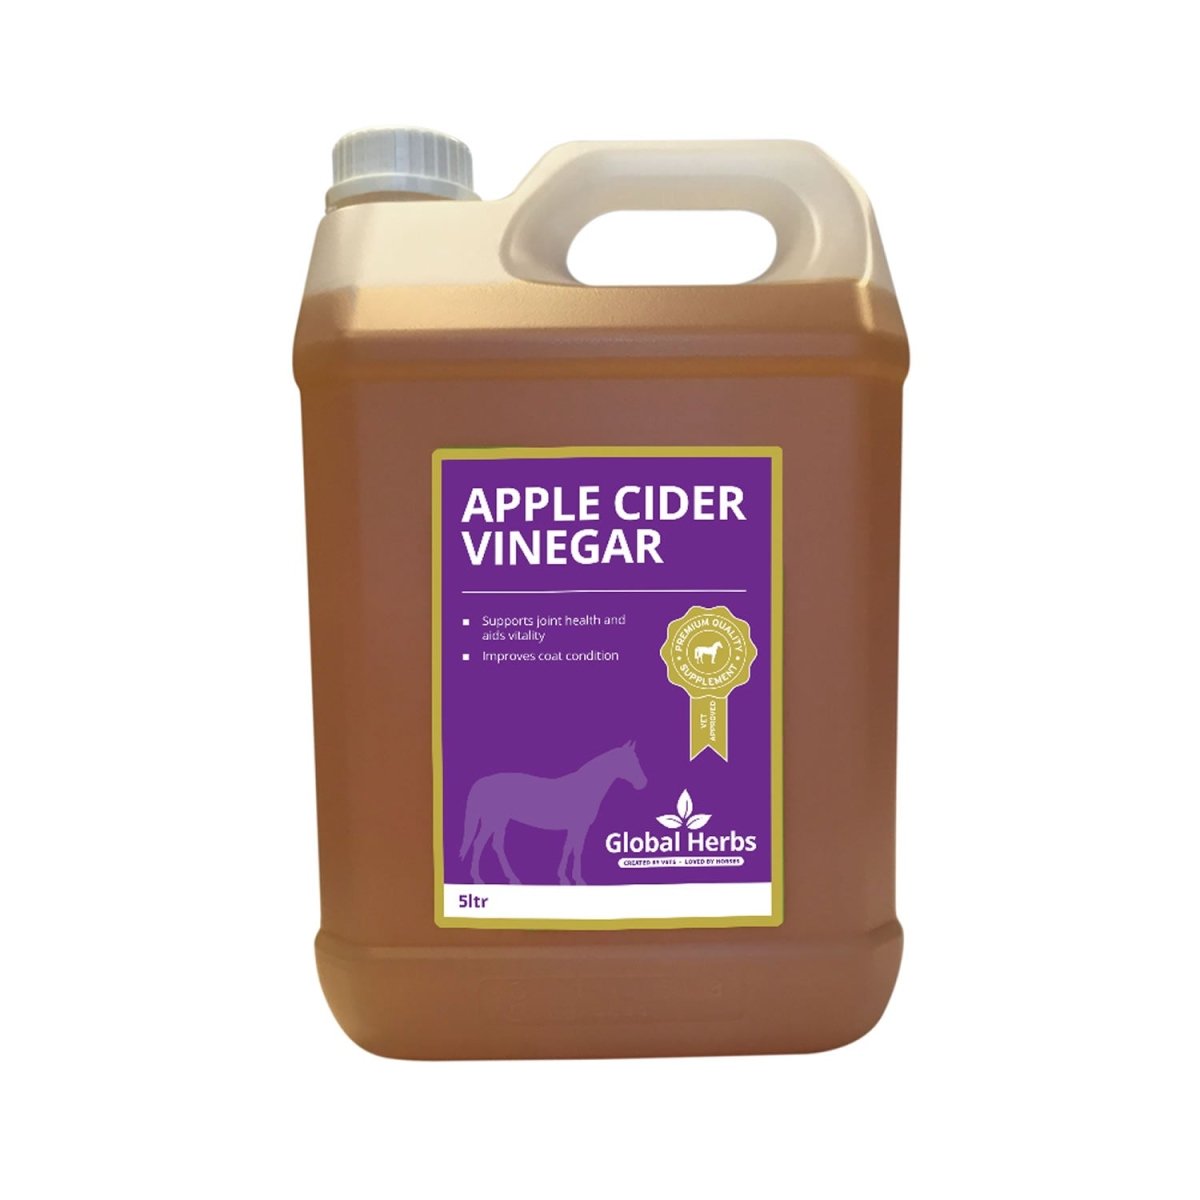 Global Herbs Apple Cider Vinegar - 5Lt -